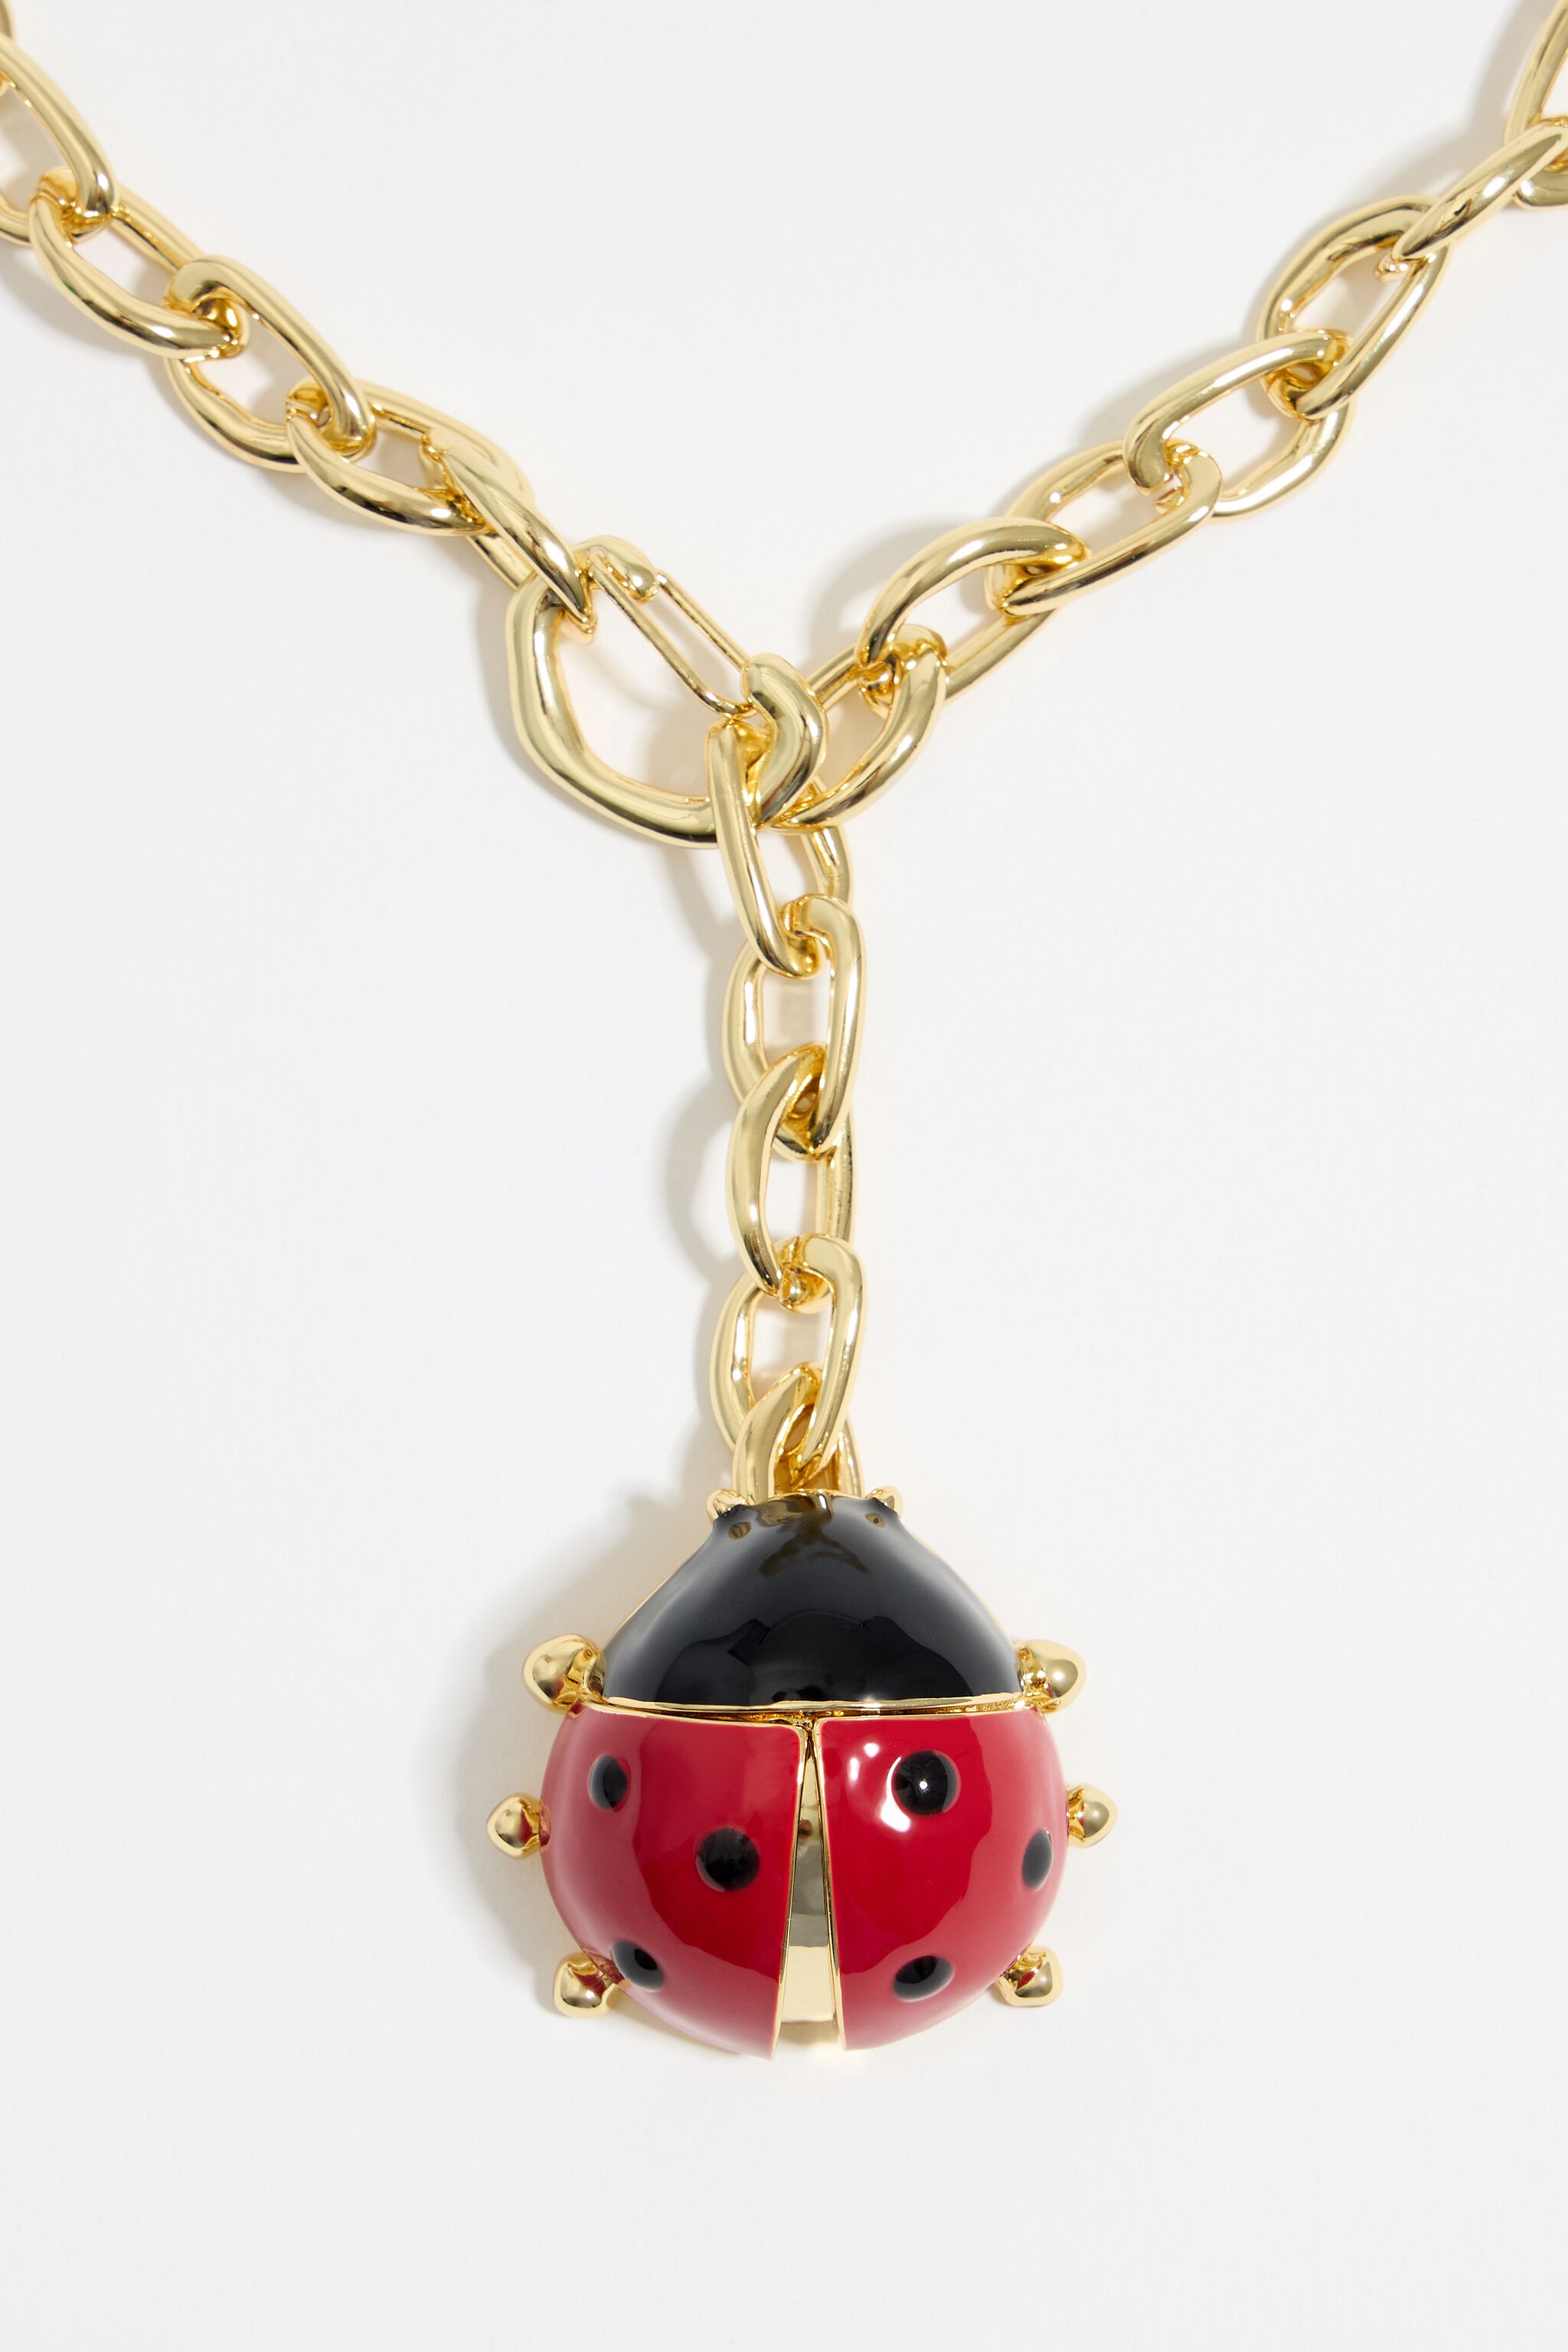 Diamond Ladybug Pendant in Yellow Gold | New York Jewelers Chicago